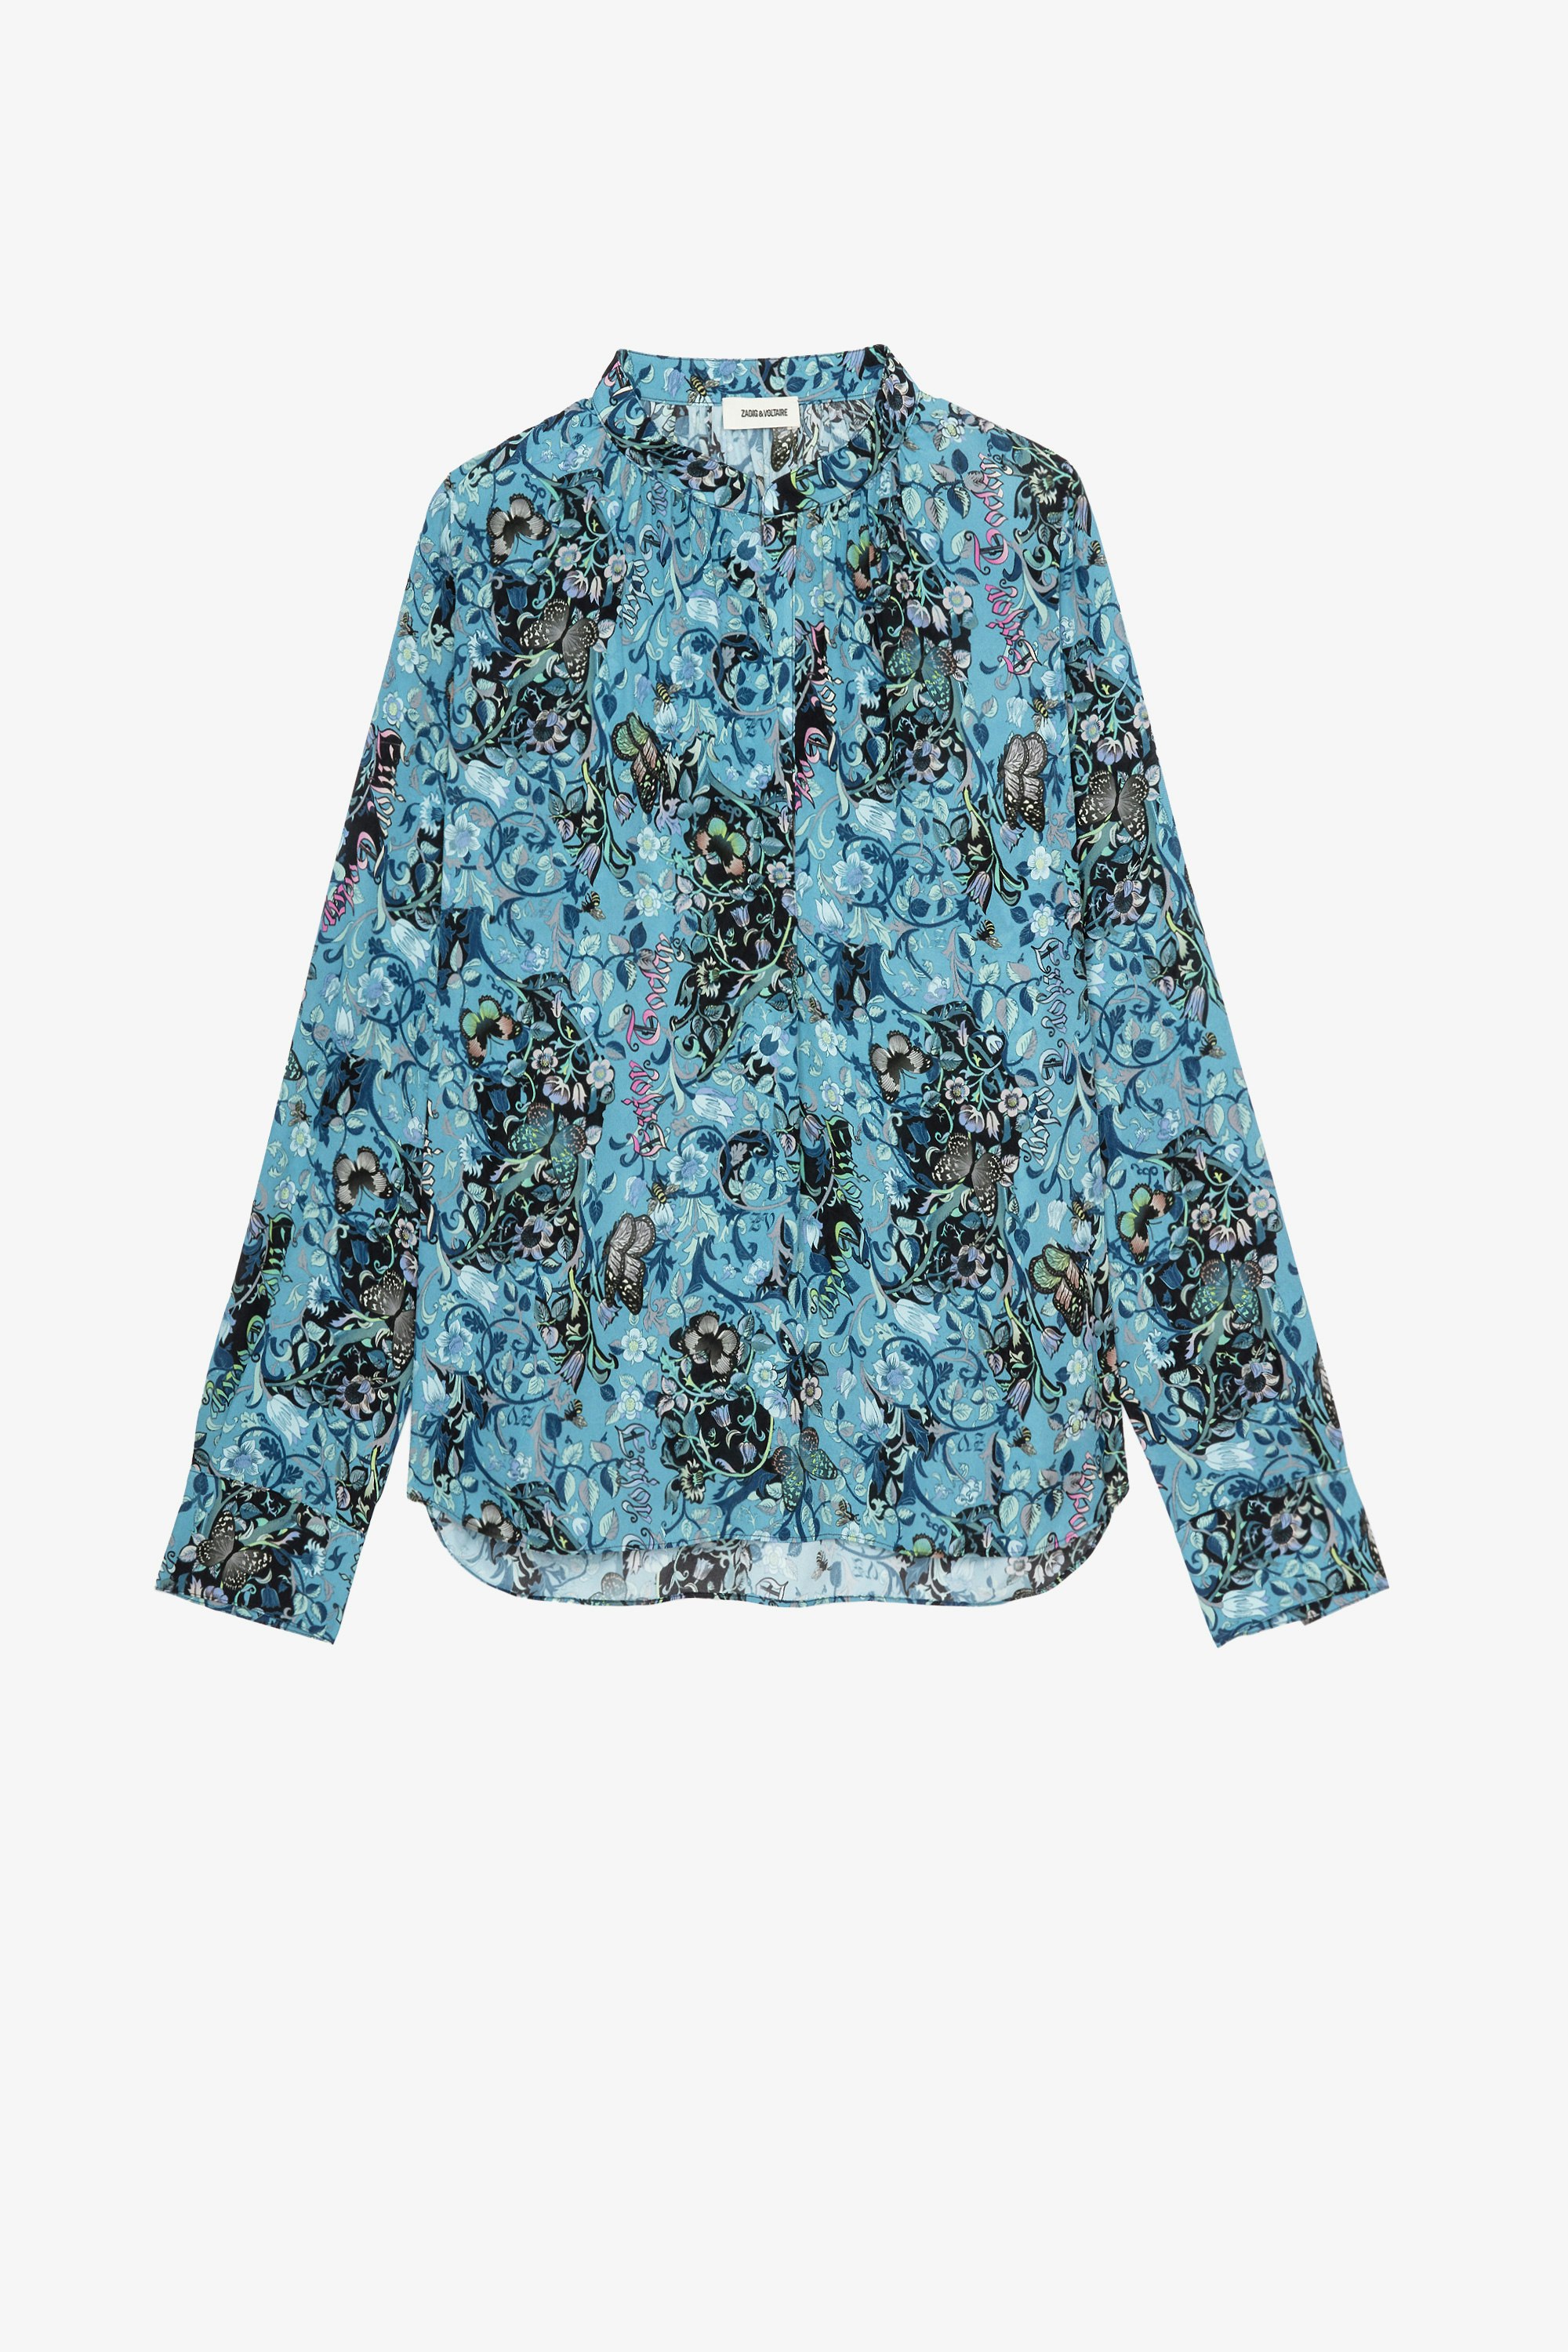 Tink Bohemian Shirt  Women's satiny blue shirt with floral print 